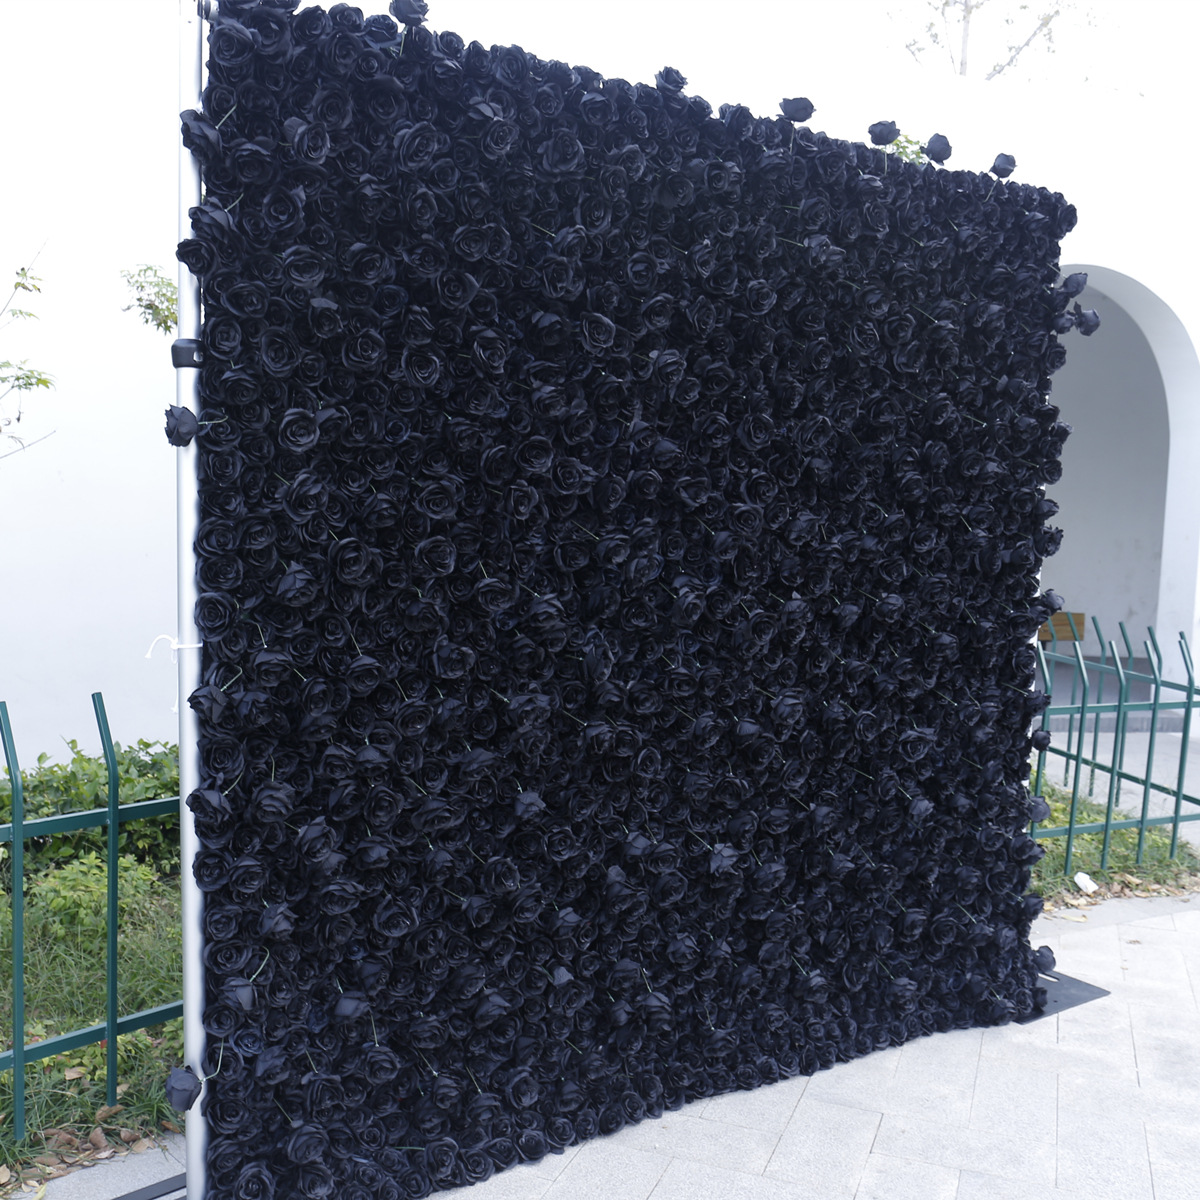 Kain ireng simulasi ngisor tembok mawar tembok latar mburi dhuwur-Kapadhetan 5D sesawangan aktivitas ruangan telung dimensi